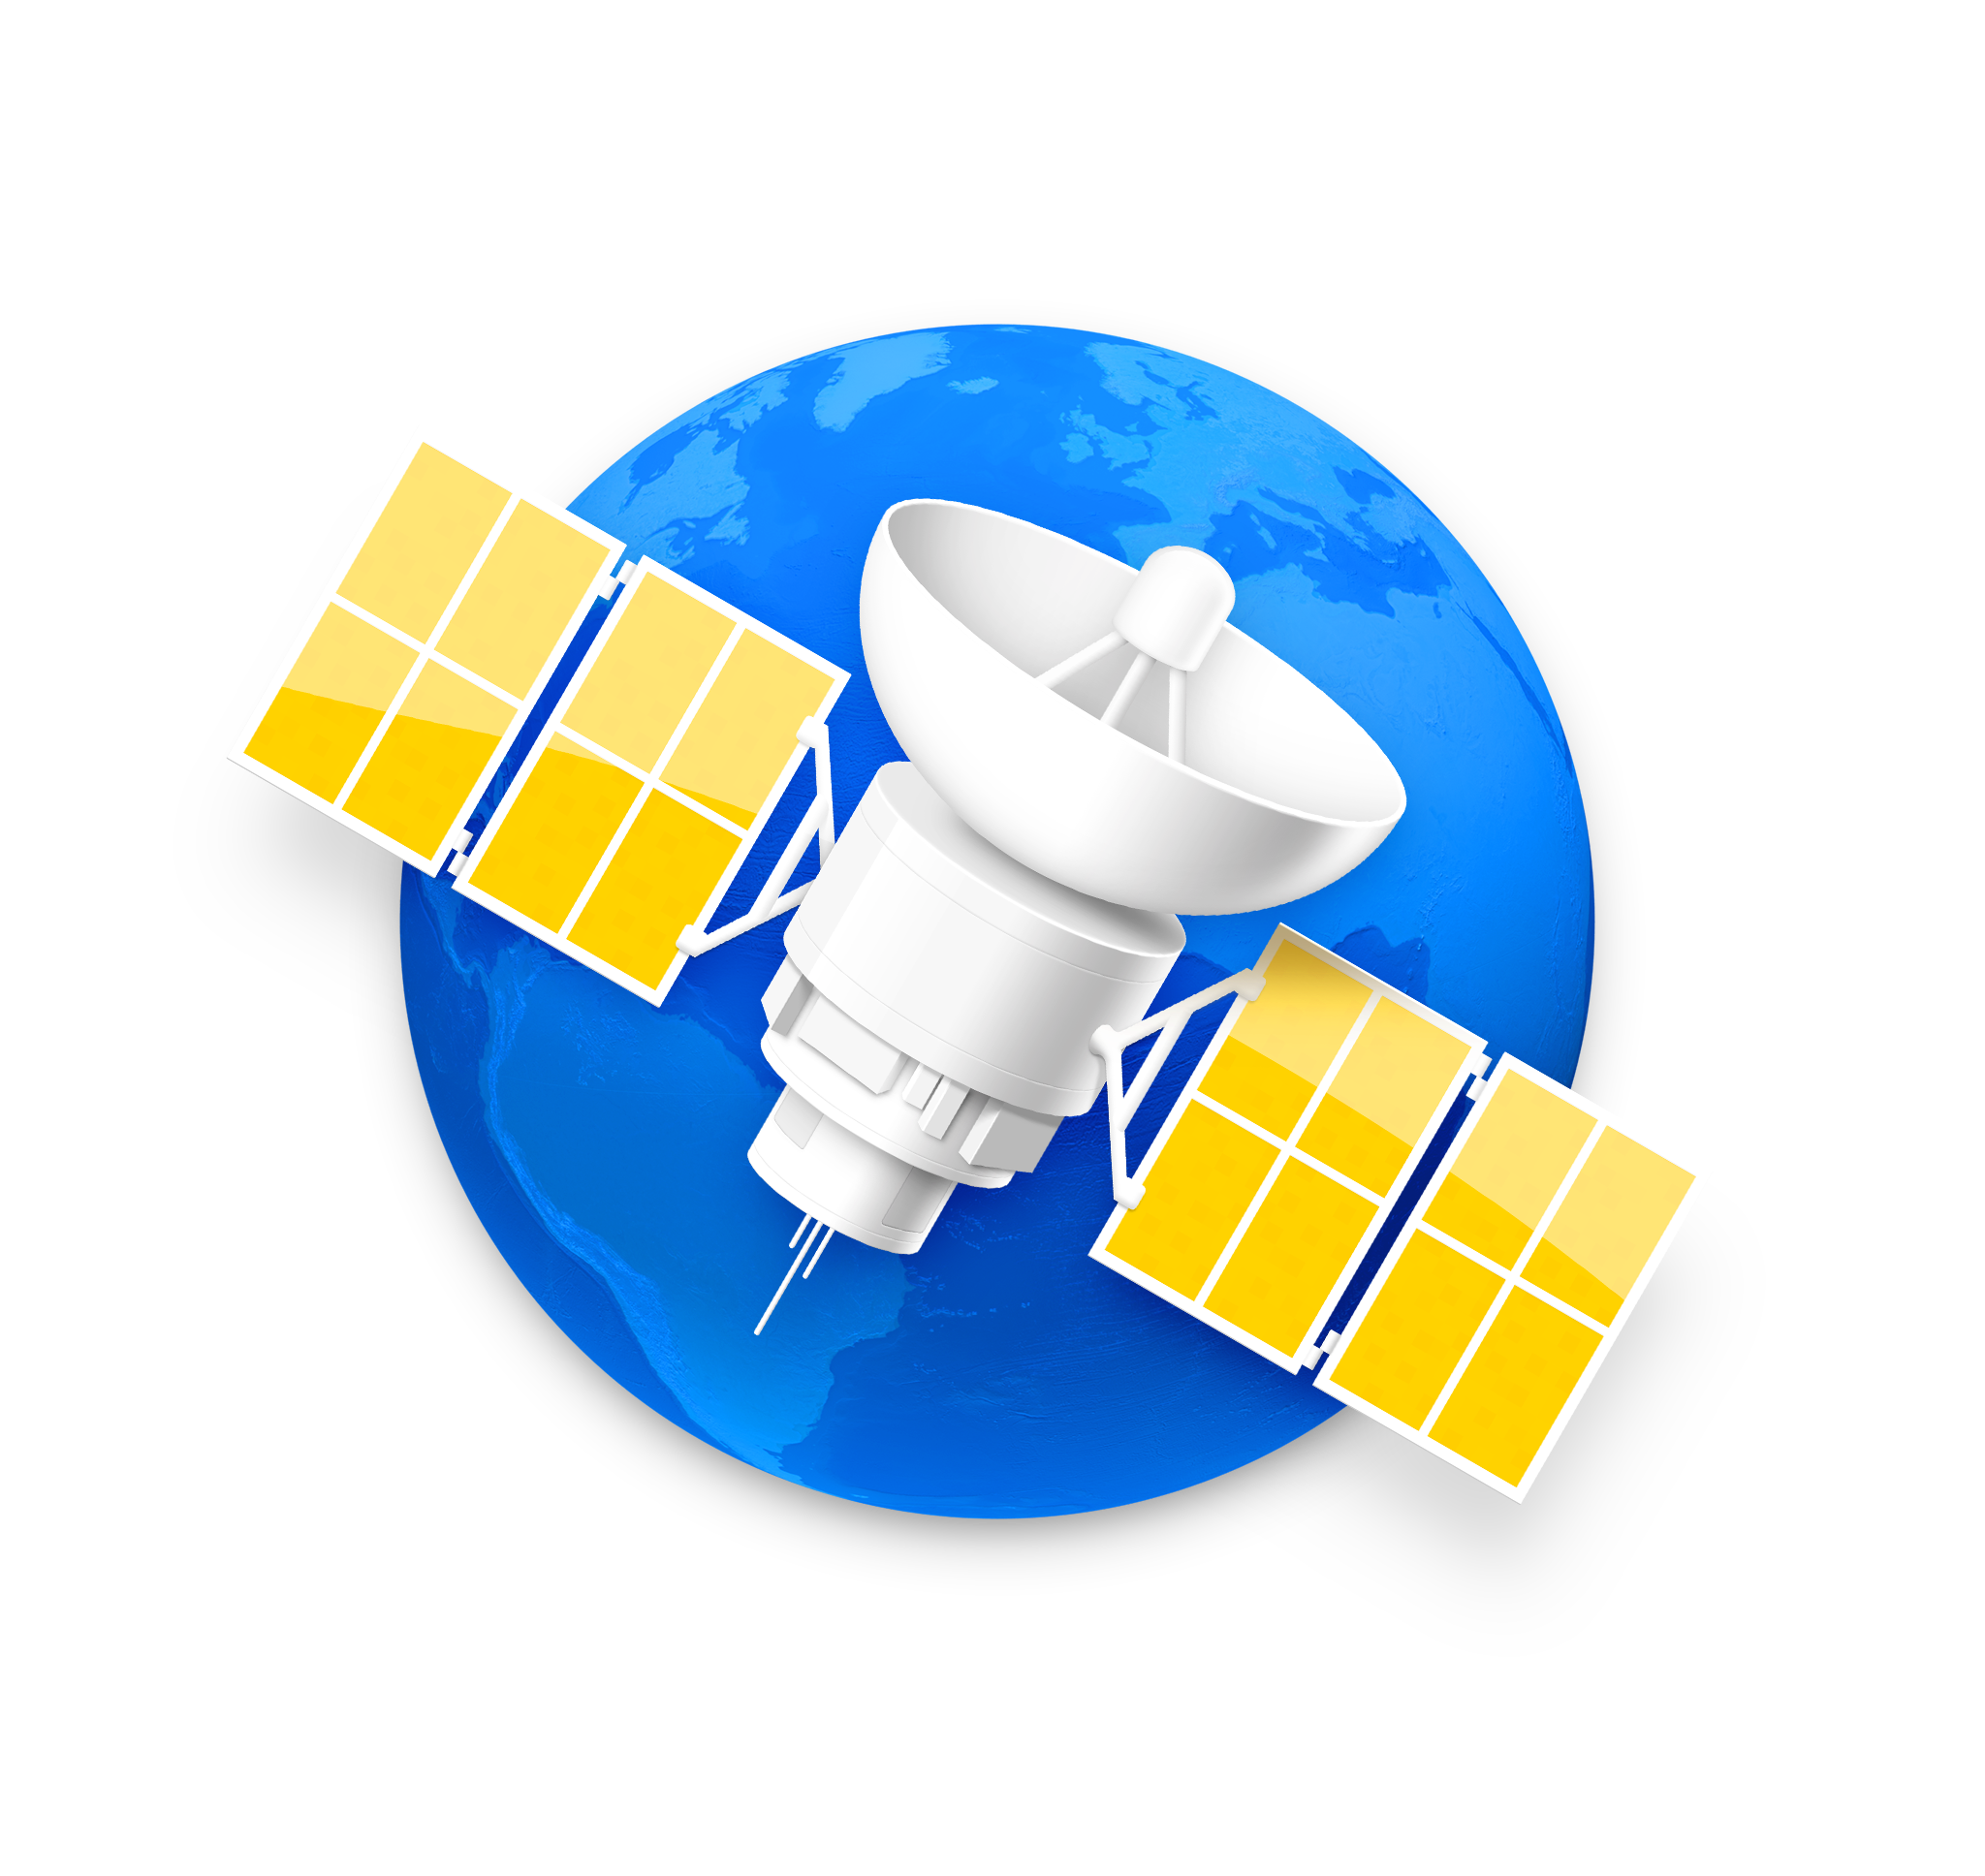 Modern NetNewsWire icon with blue globe and satellite.